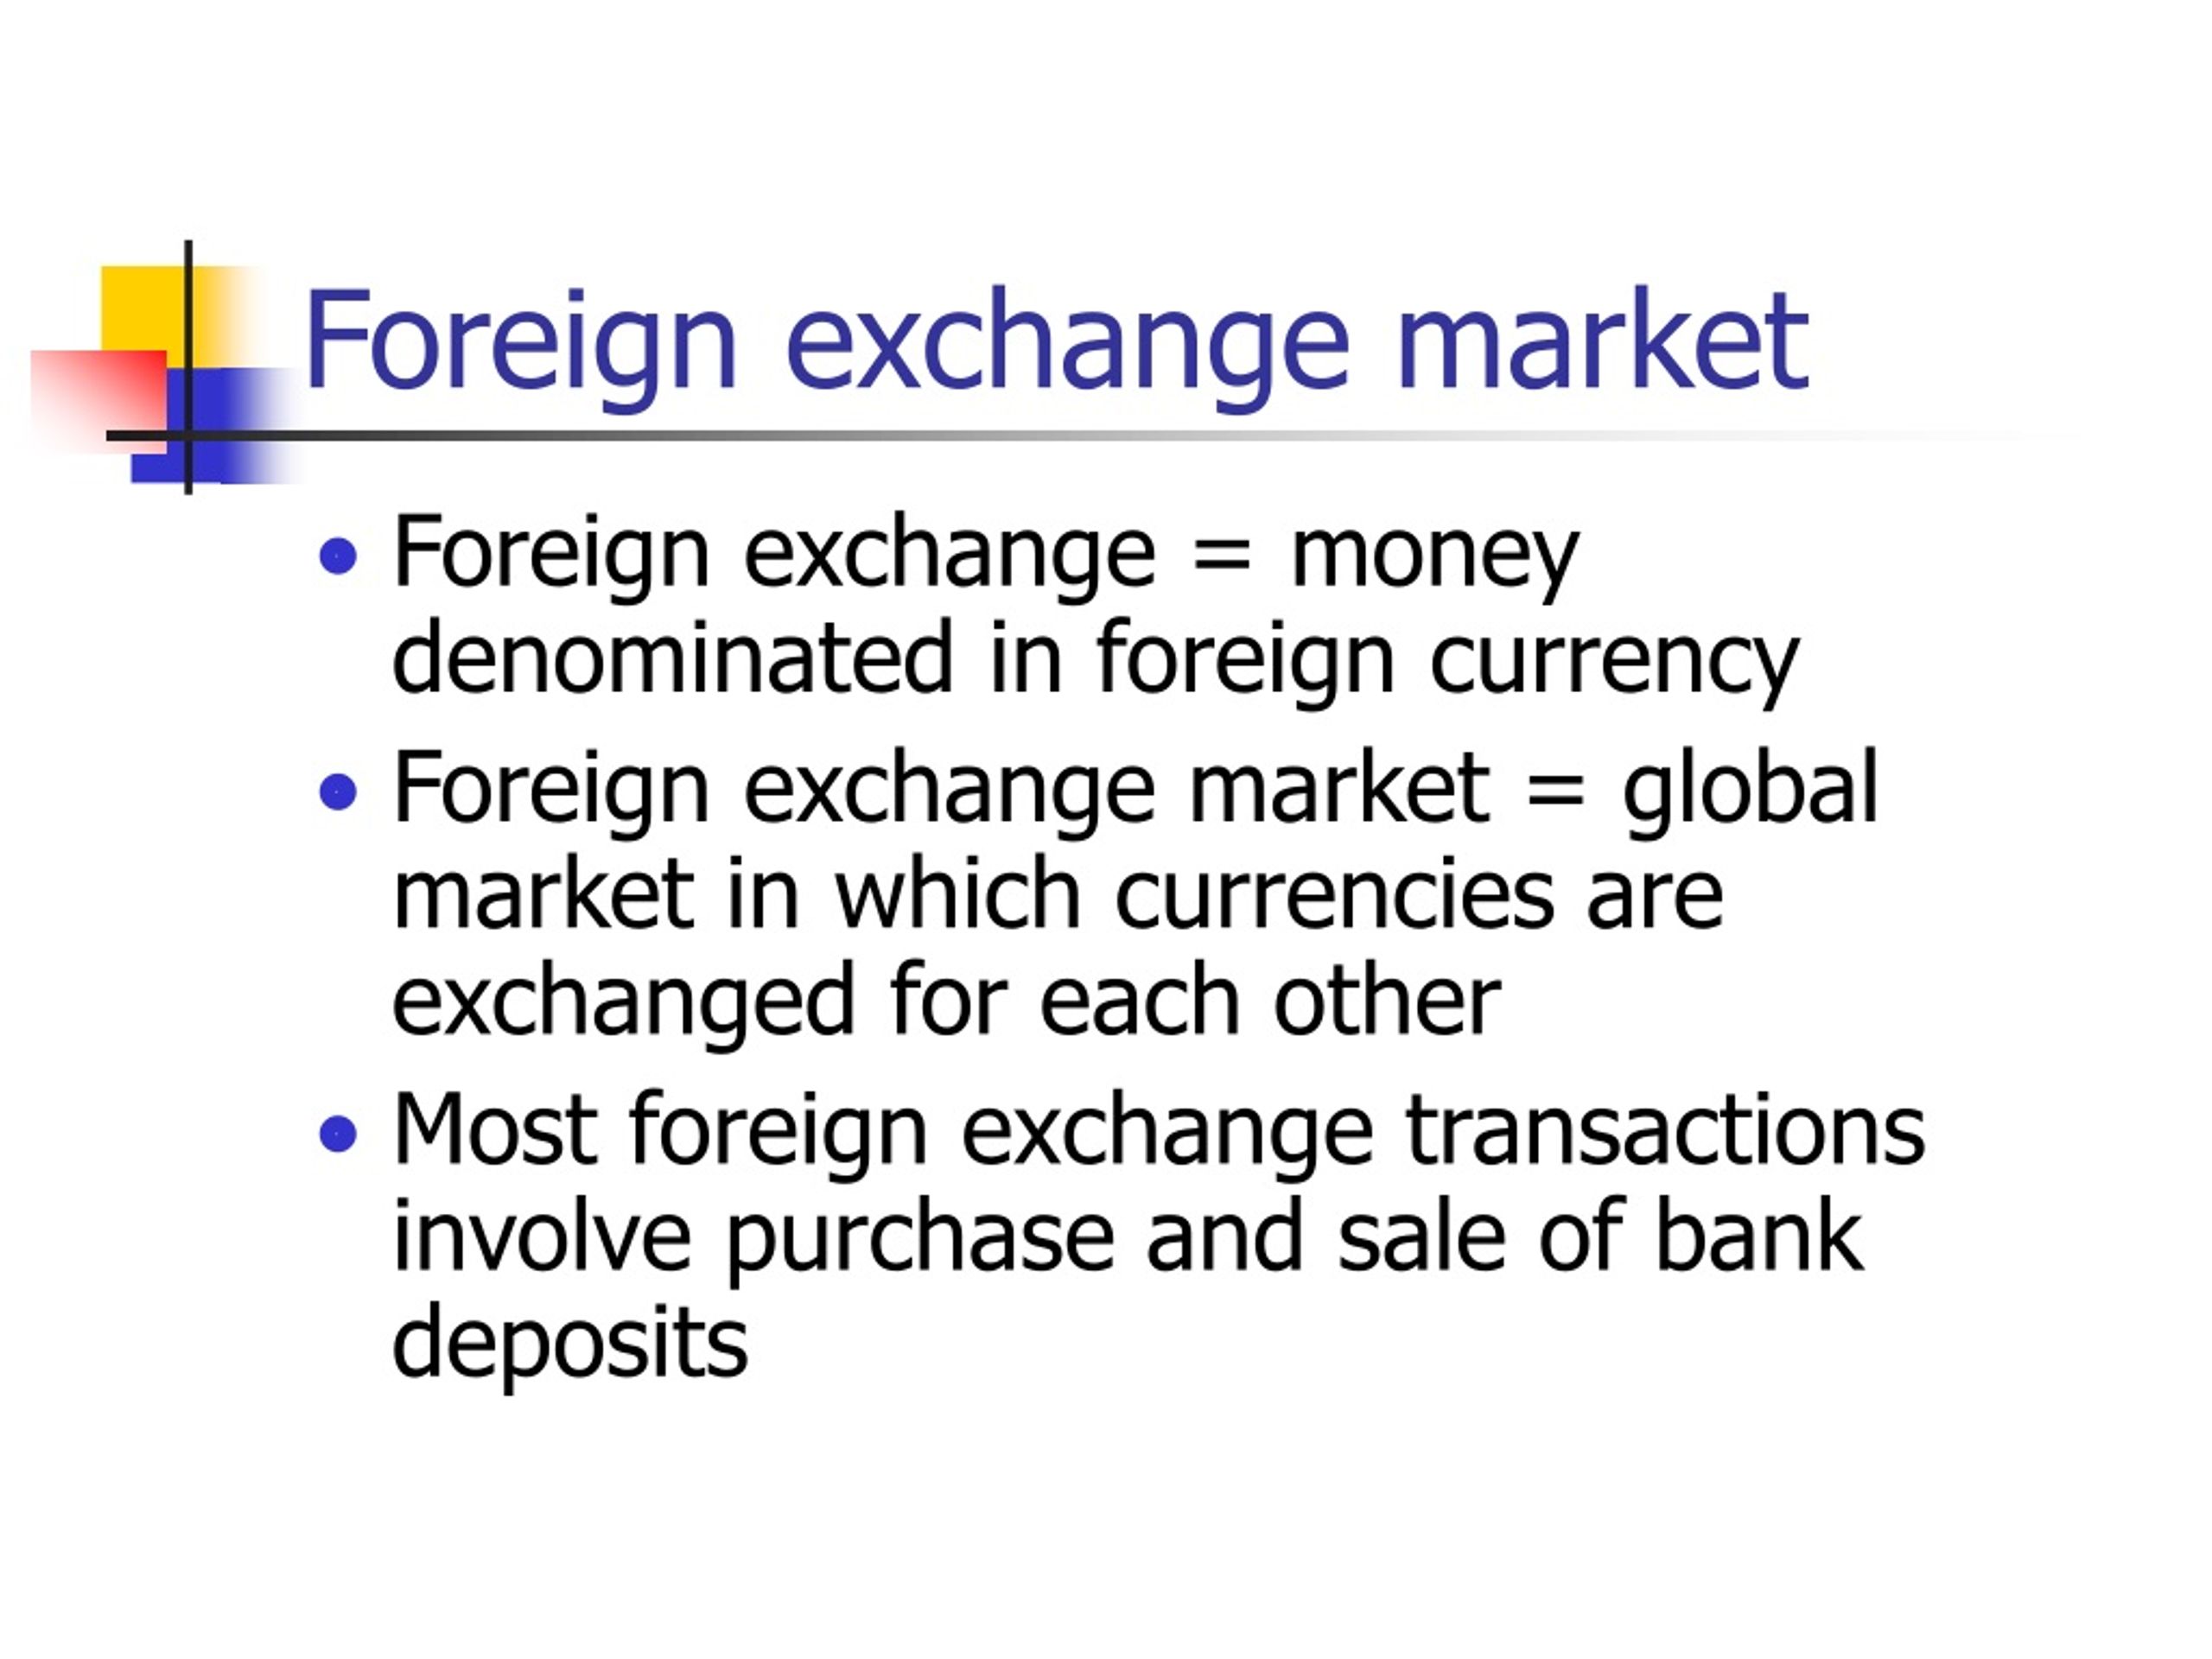 Foreign exchange market tax benefits